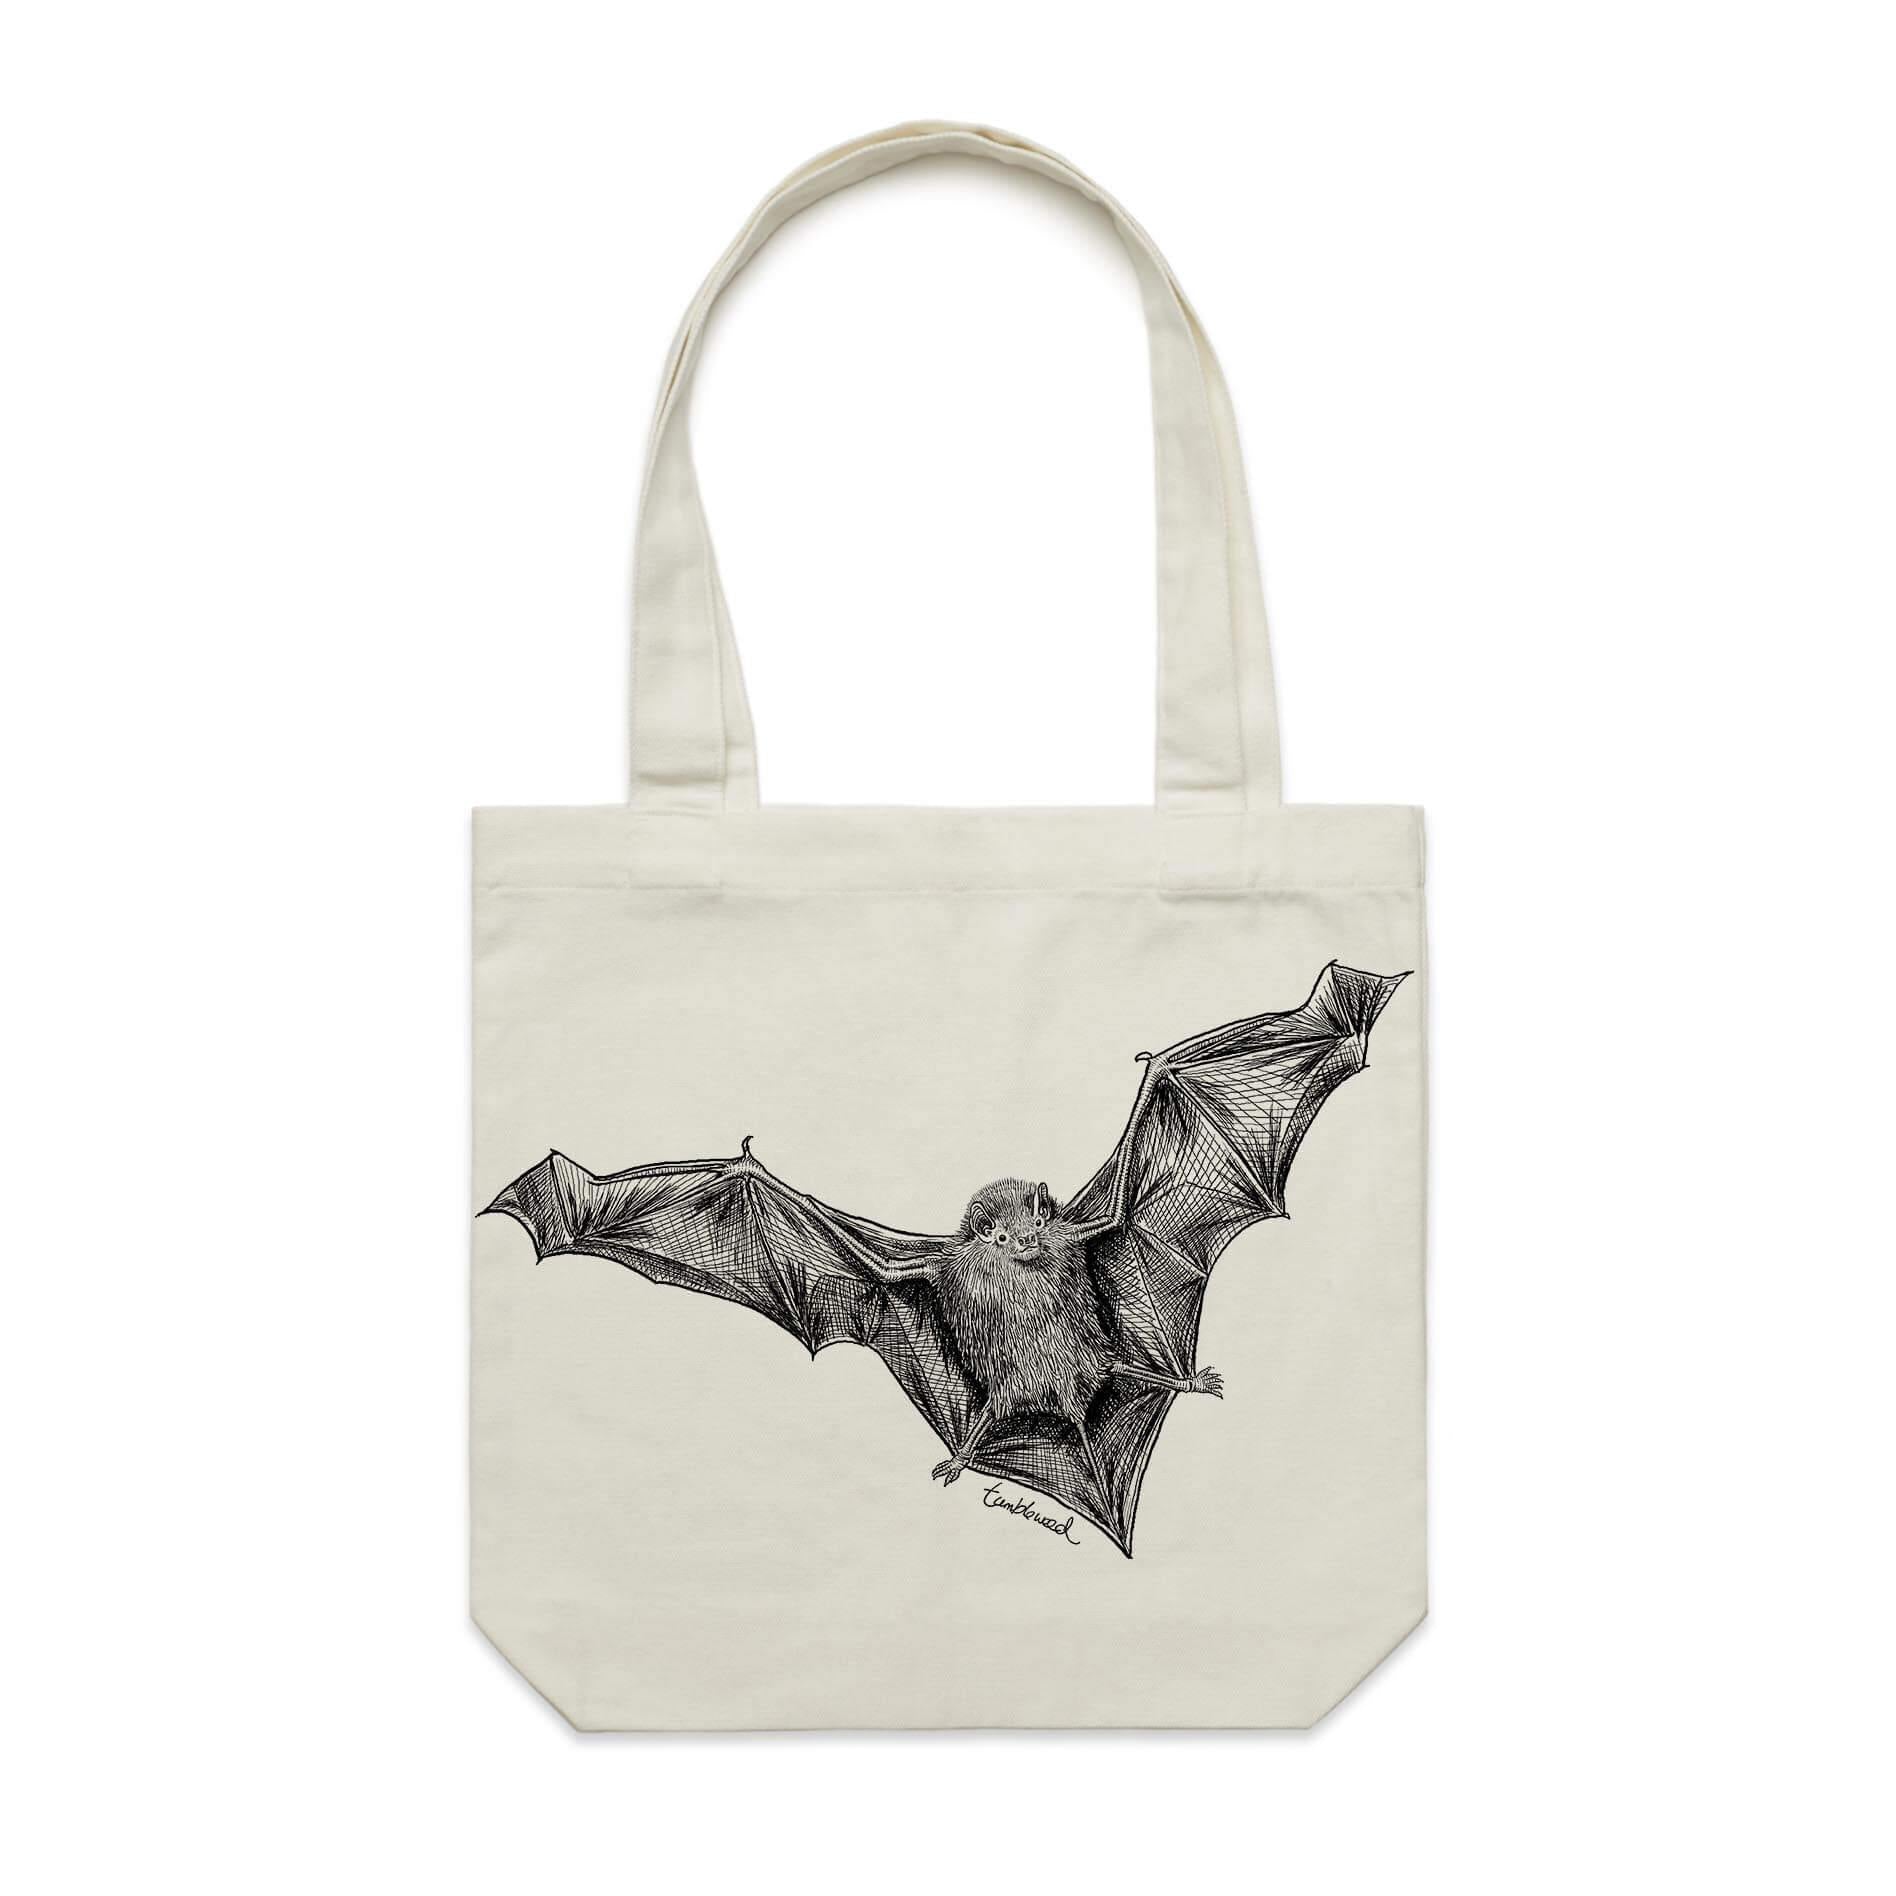 Cotton canvas tote bag with a screen printed Bat/Pekapeka design.